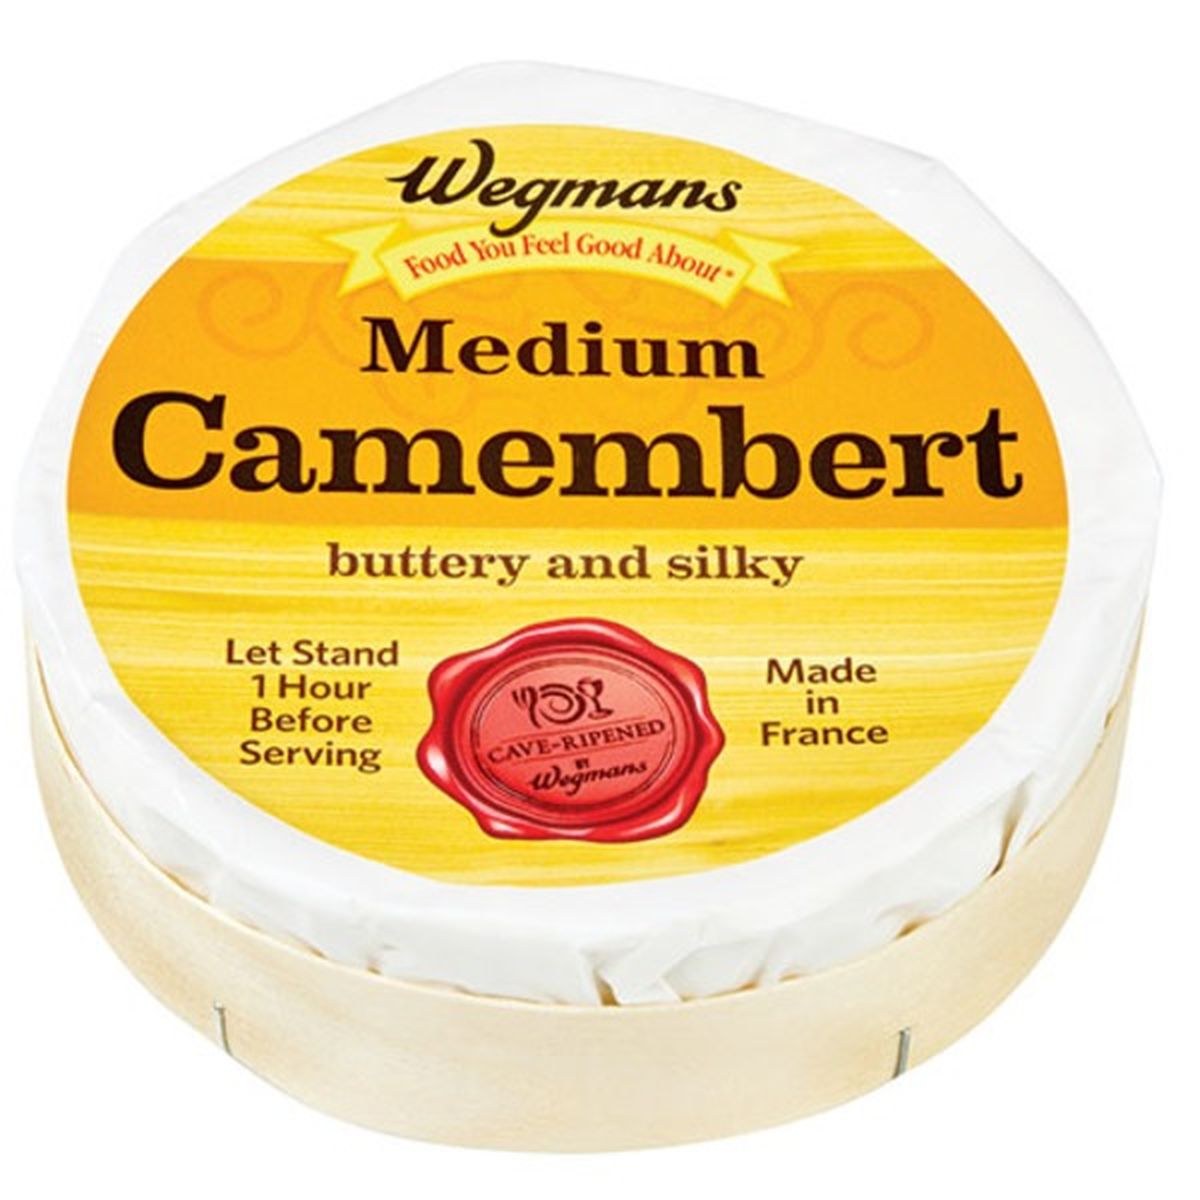 Calories in Wegmans Cave-Ripened Medium Camembert Cheese, Buttery